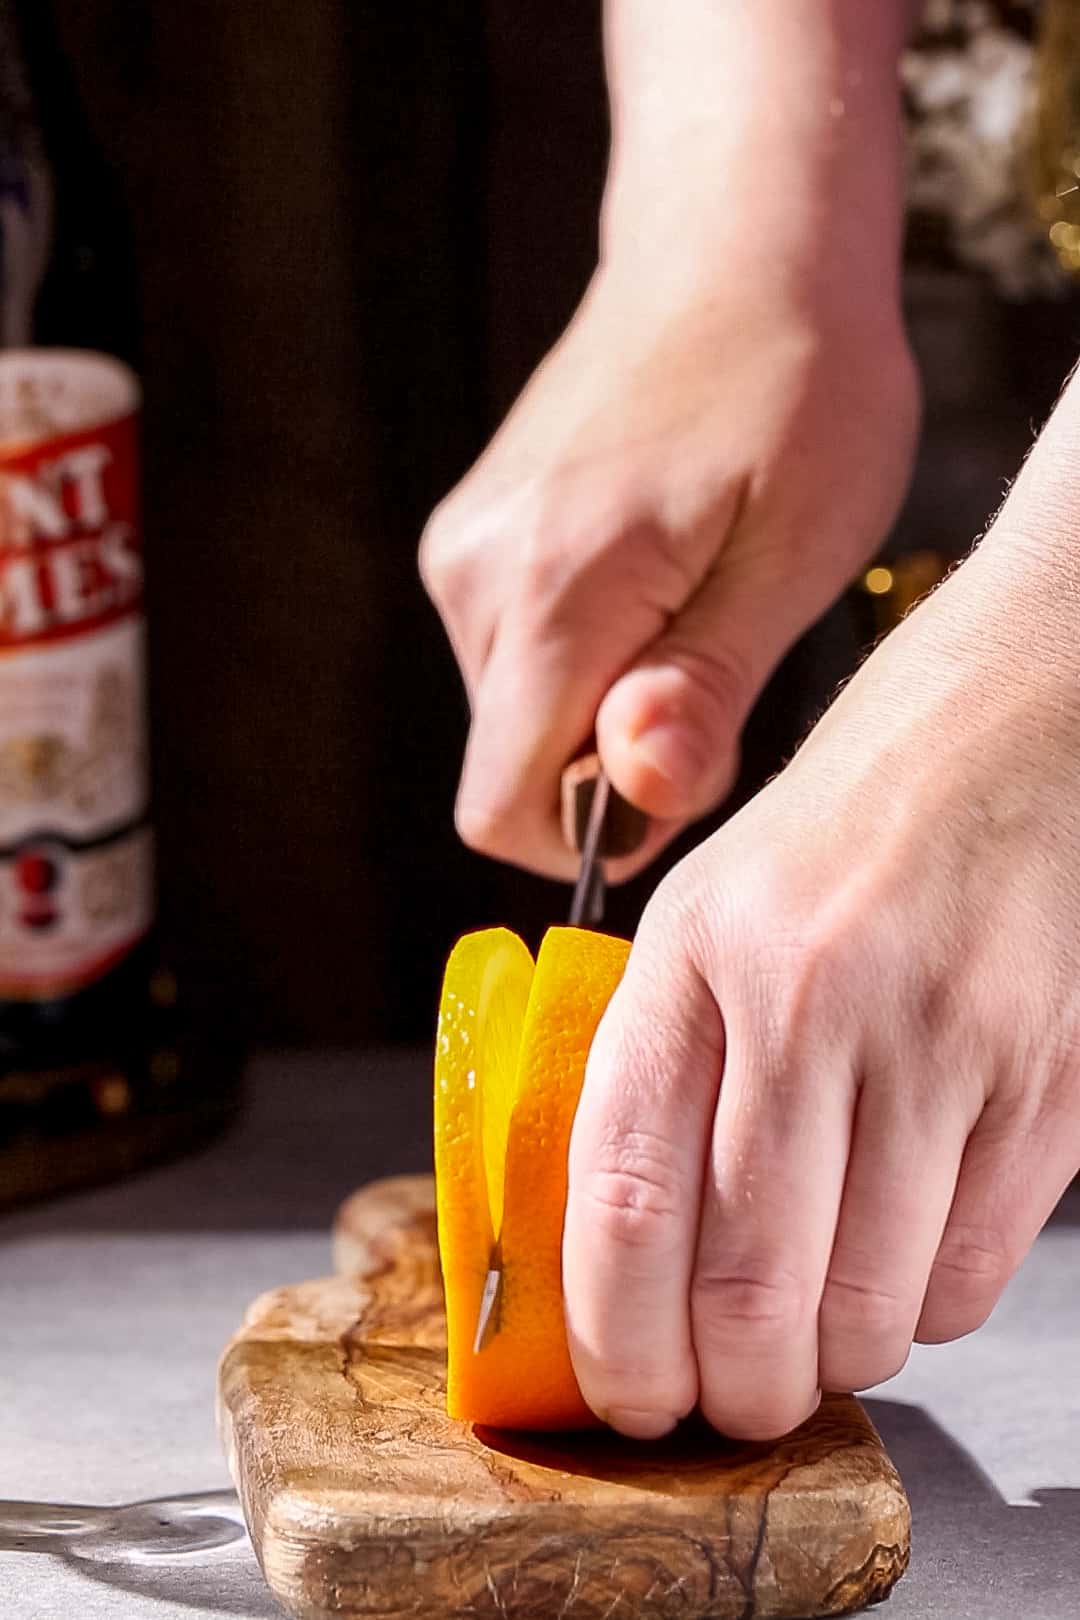 Hands cutting an orange on a cutting board.